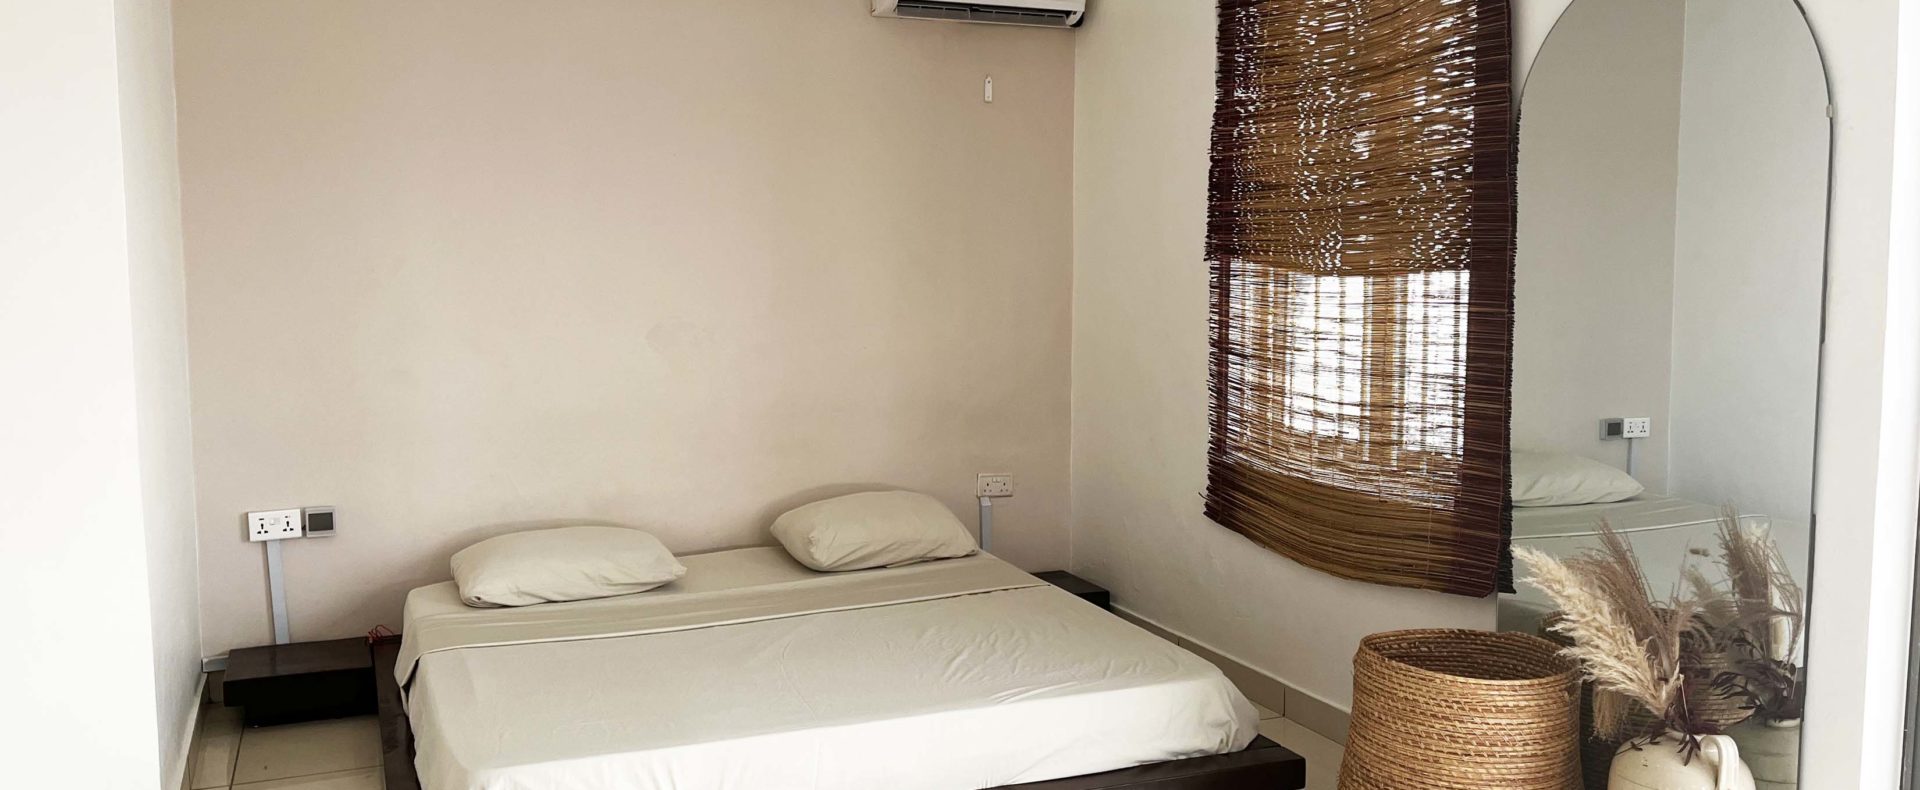 1 Bedroom Short Let Minimal Studio Lekki Apartment Nigeria In Lekki Lagos Nigeria